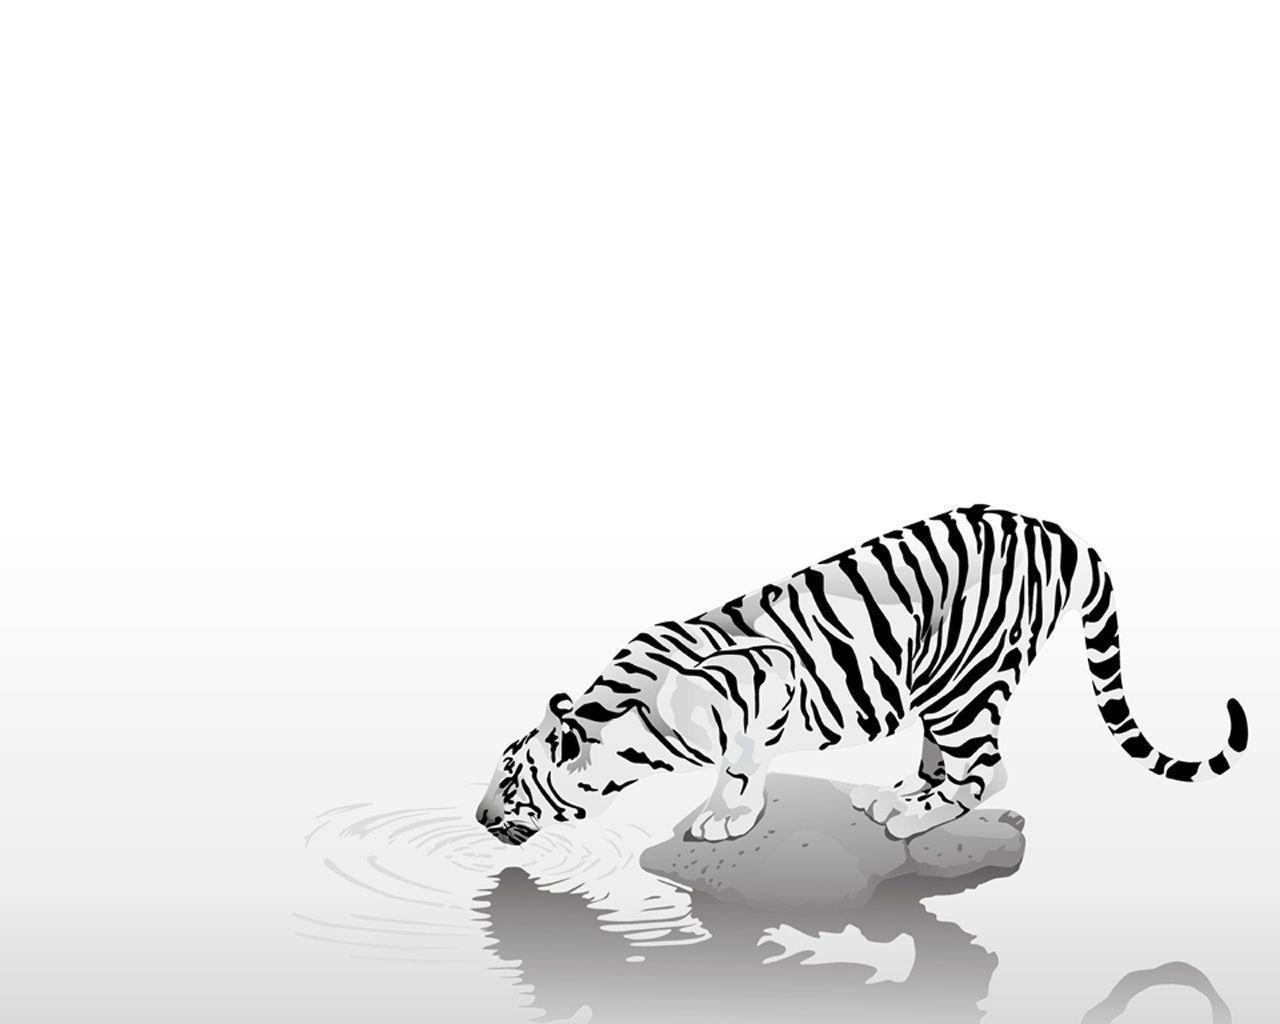 White Tiger 115 214336 High Definition Wallpaper. wallalay